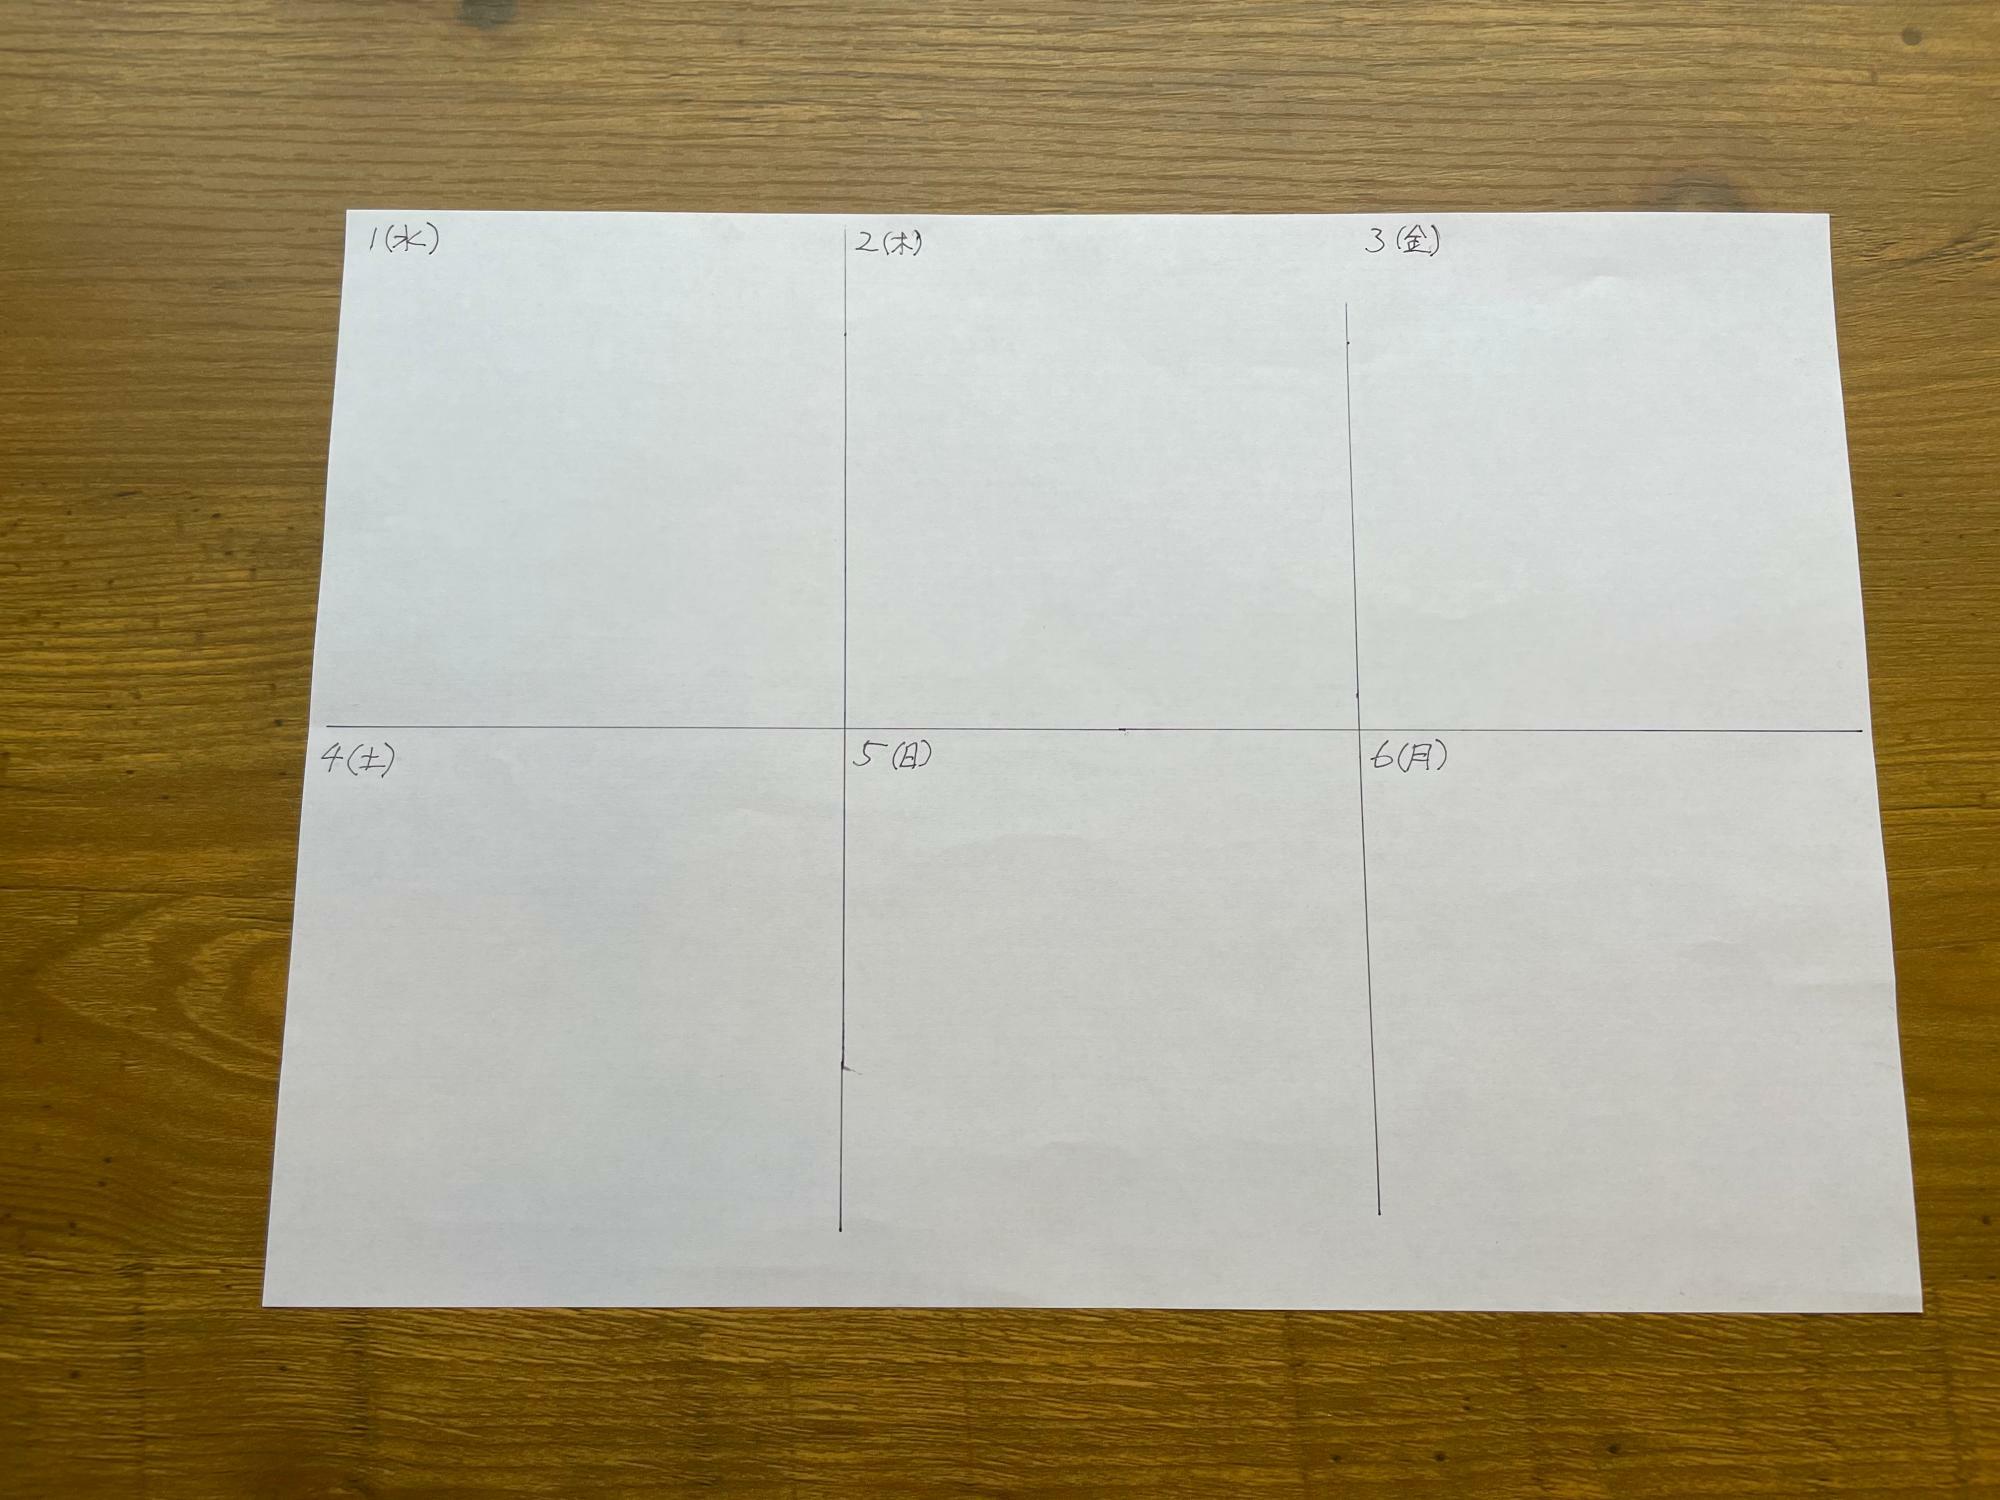 A4の紙を6等分して区切ったところ。それぞれのスペースに日付を記入する